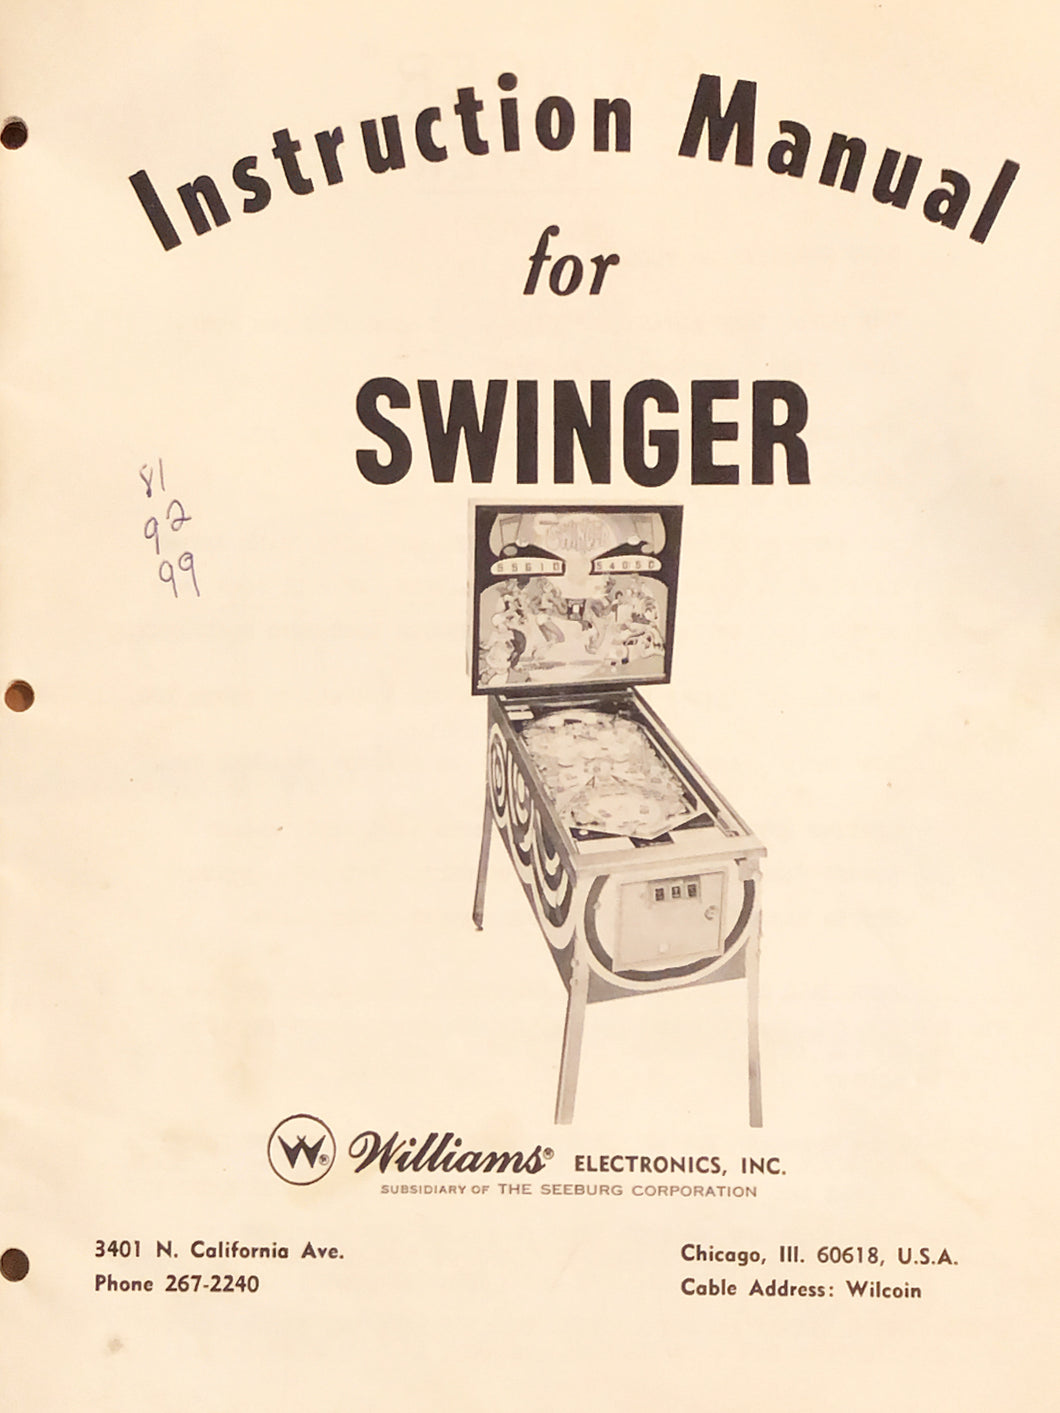 Swinger Complete Pinball Manual